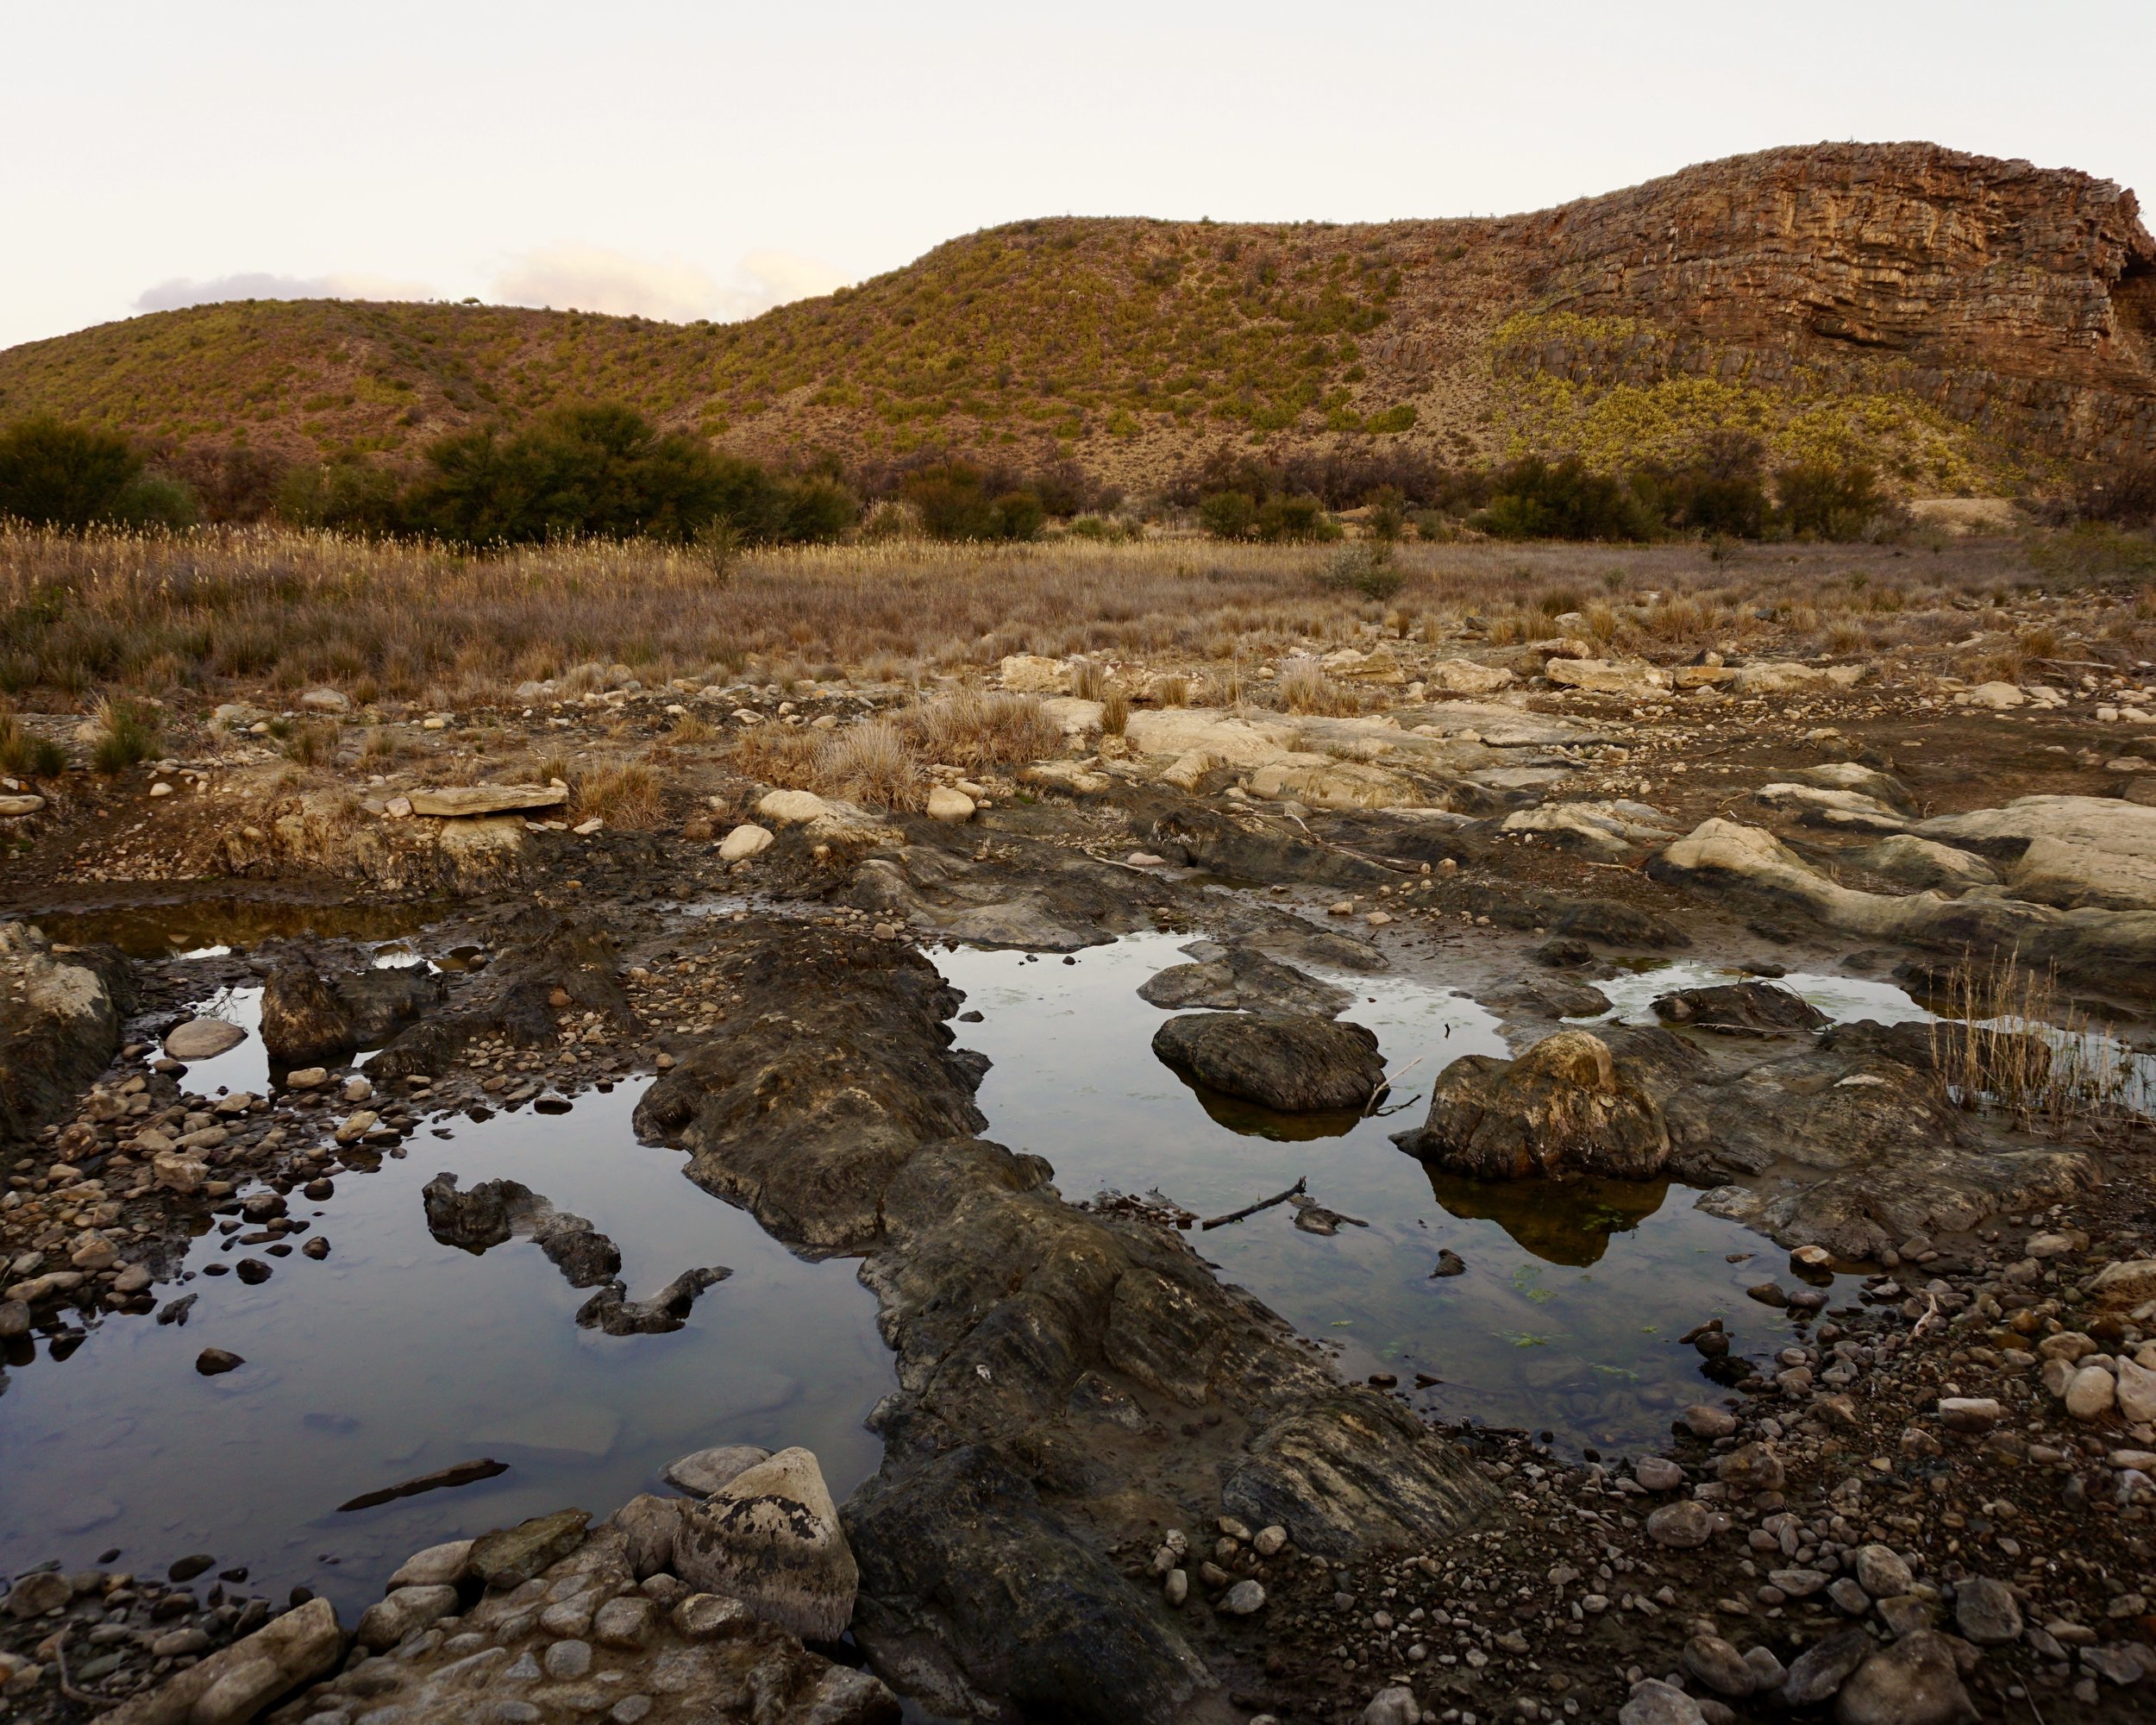 Klein Karoo: Dry River Bed